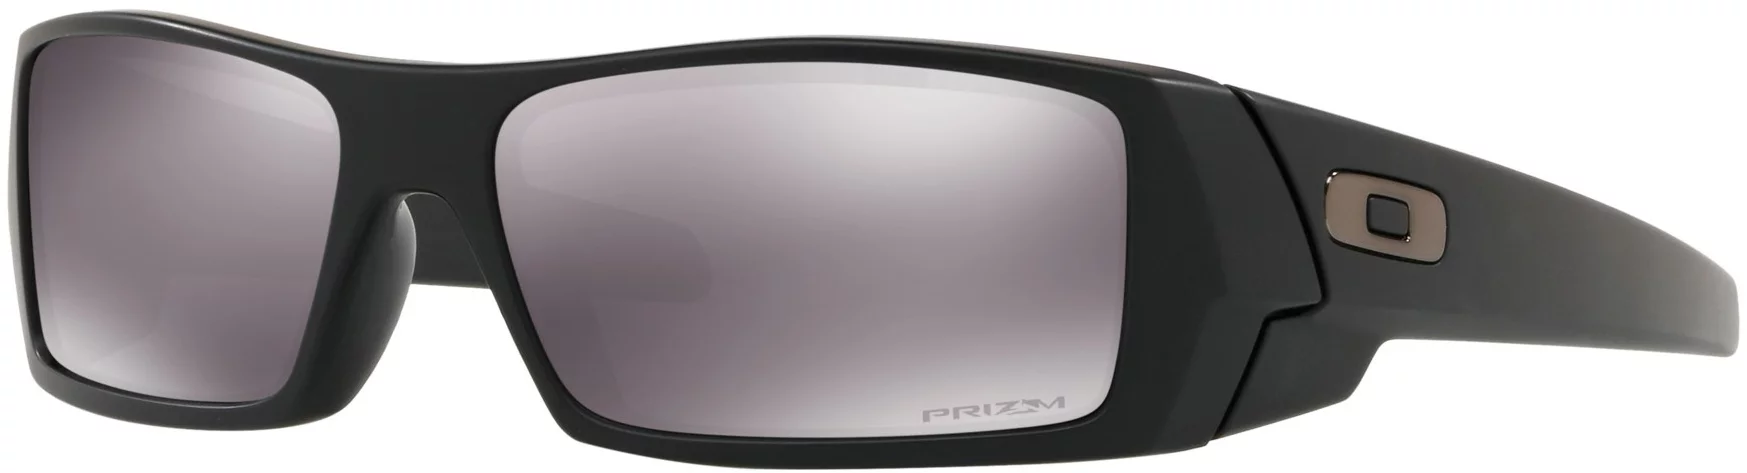 Oakley Gascan Sunglasses - matte black/prizm black lens - Free Shipping |  Tactics